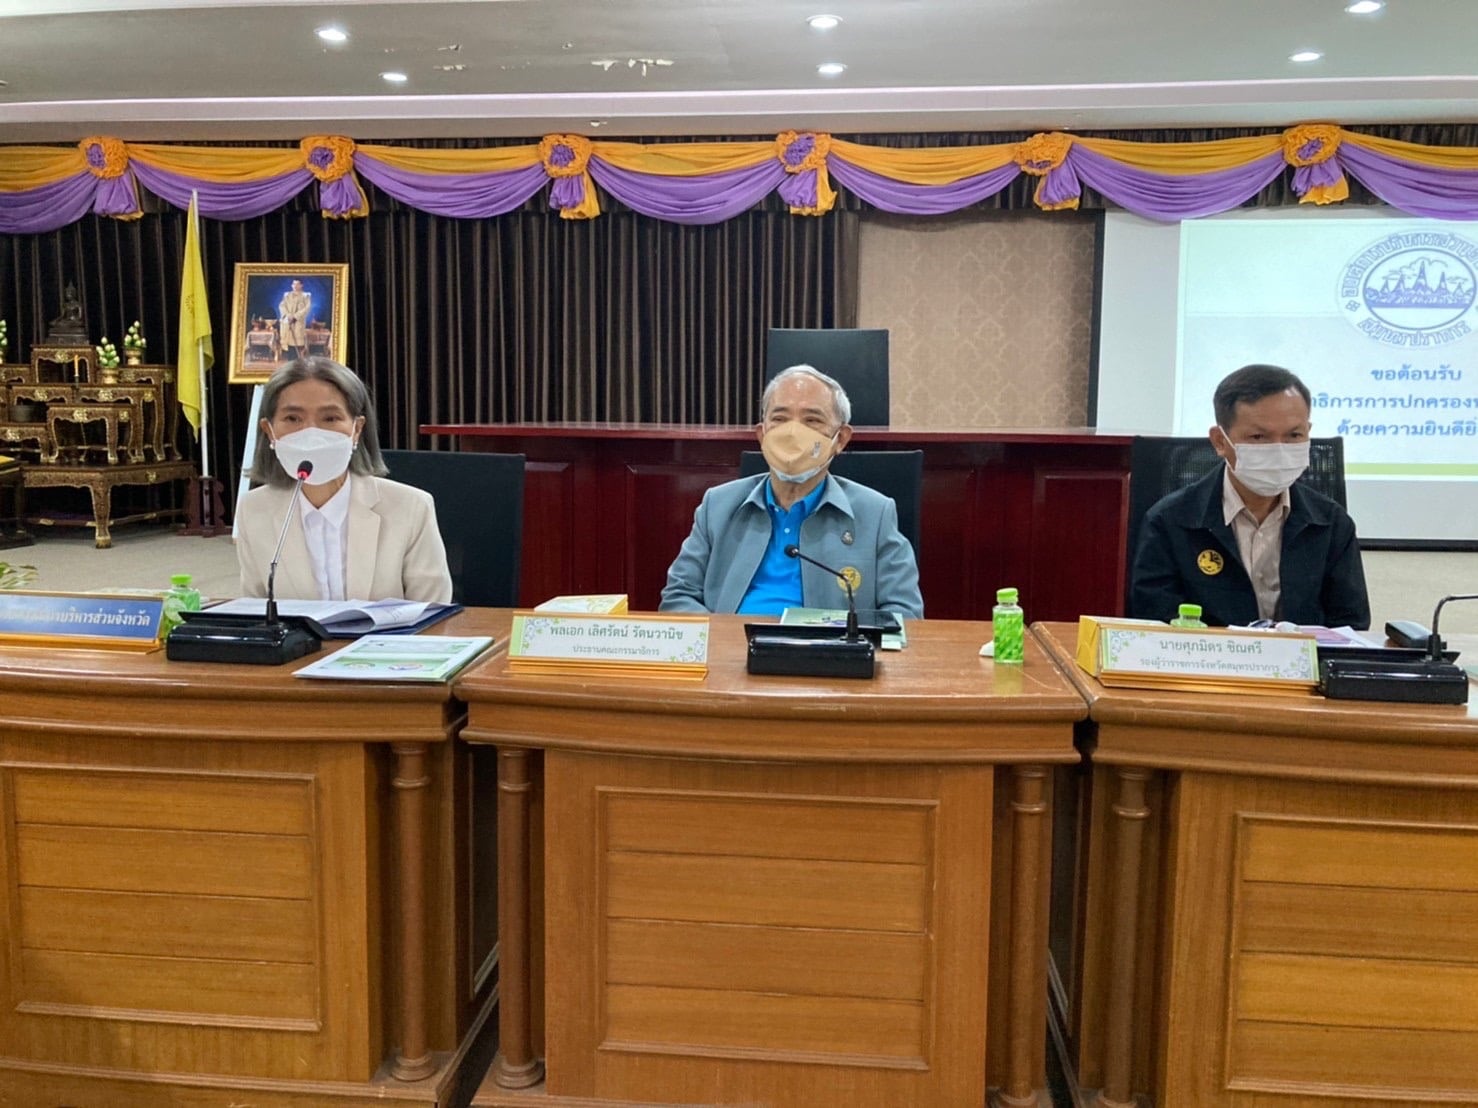 23 December 2021, at Samut Prakan Municipality Office, Samut Prakan Province